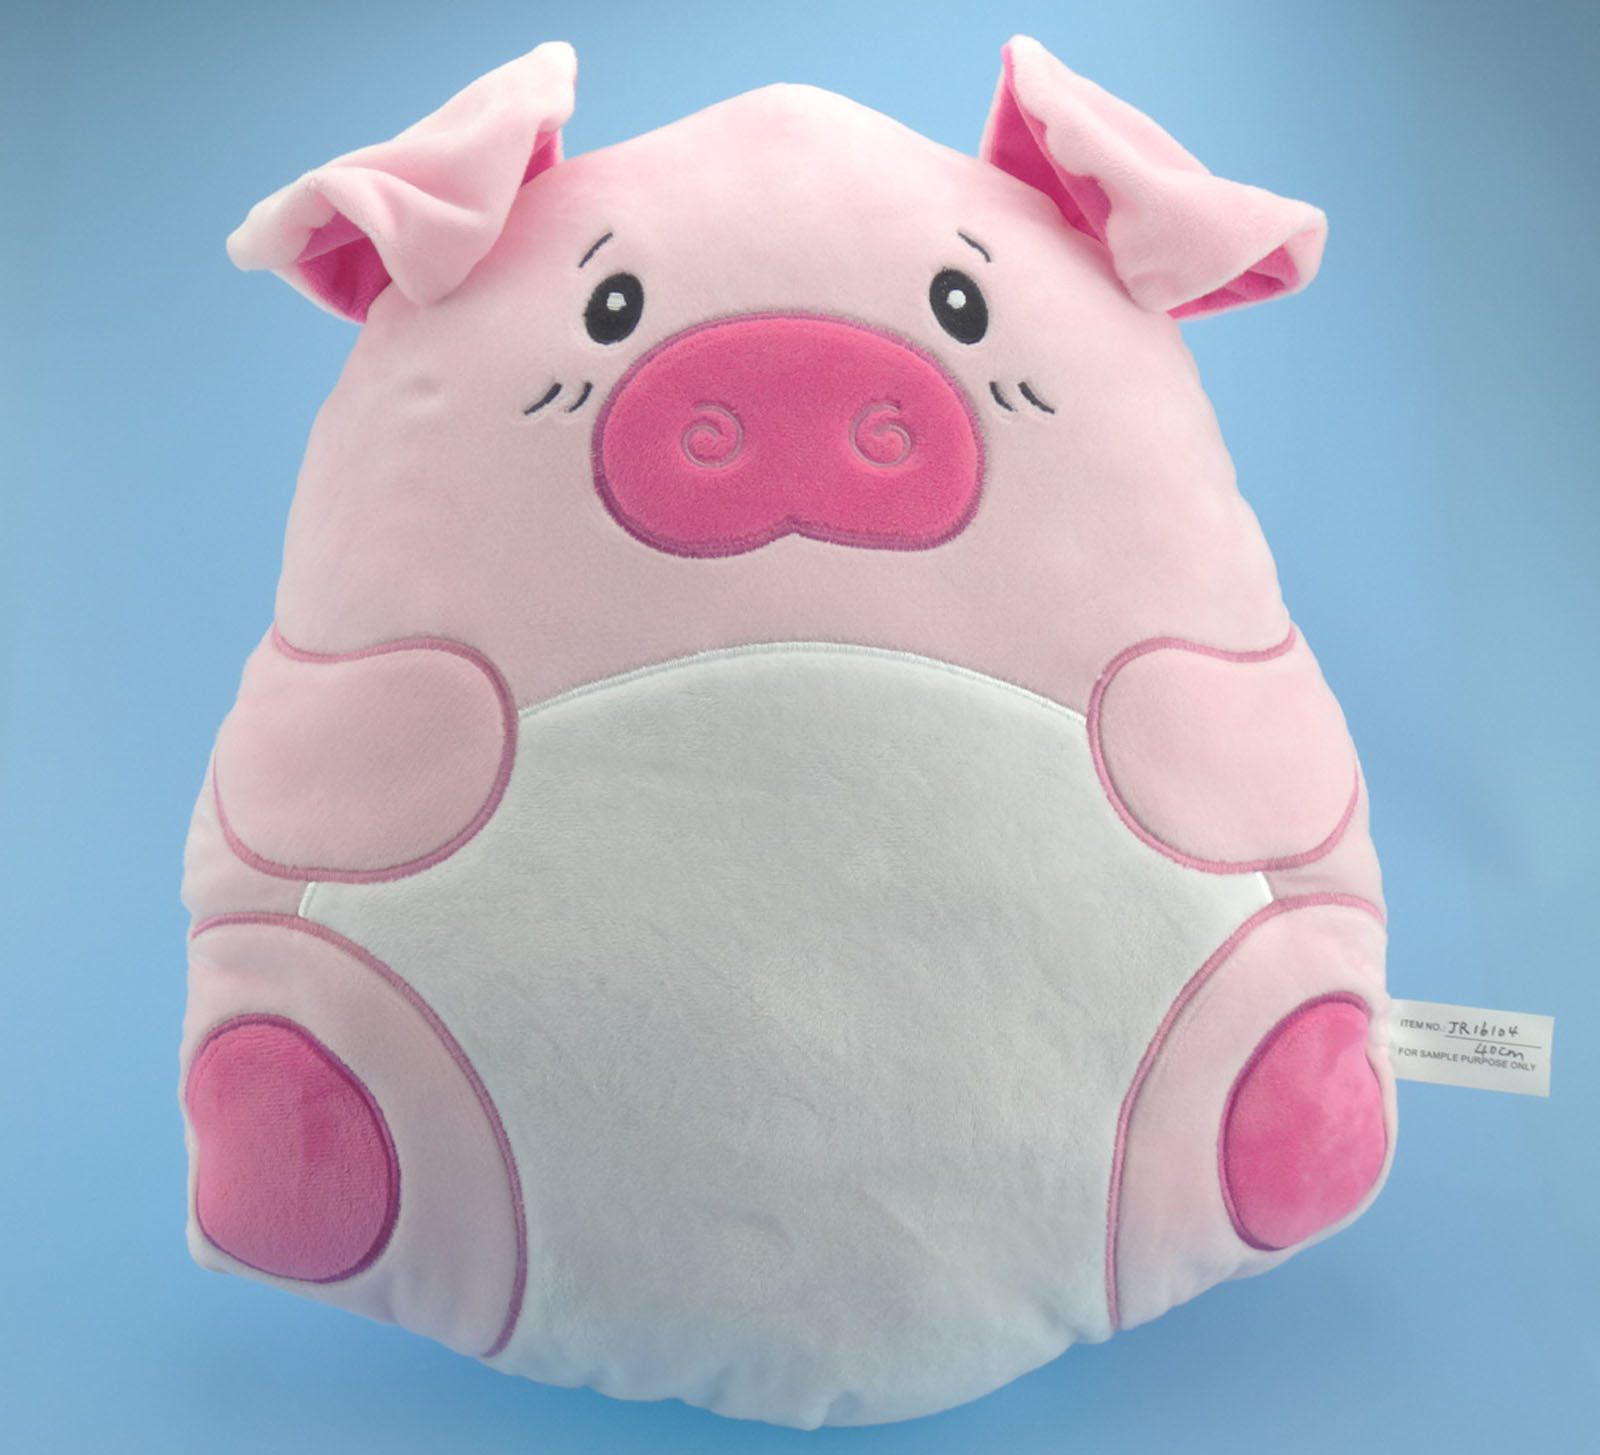 Soft Stuffed Plush Toy Pig Cushion